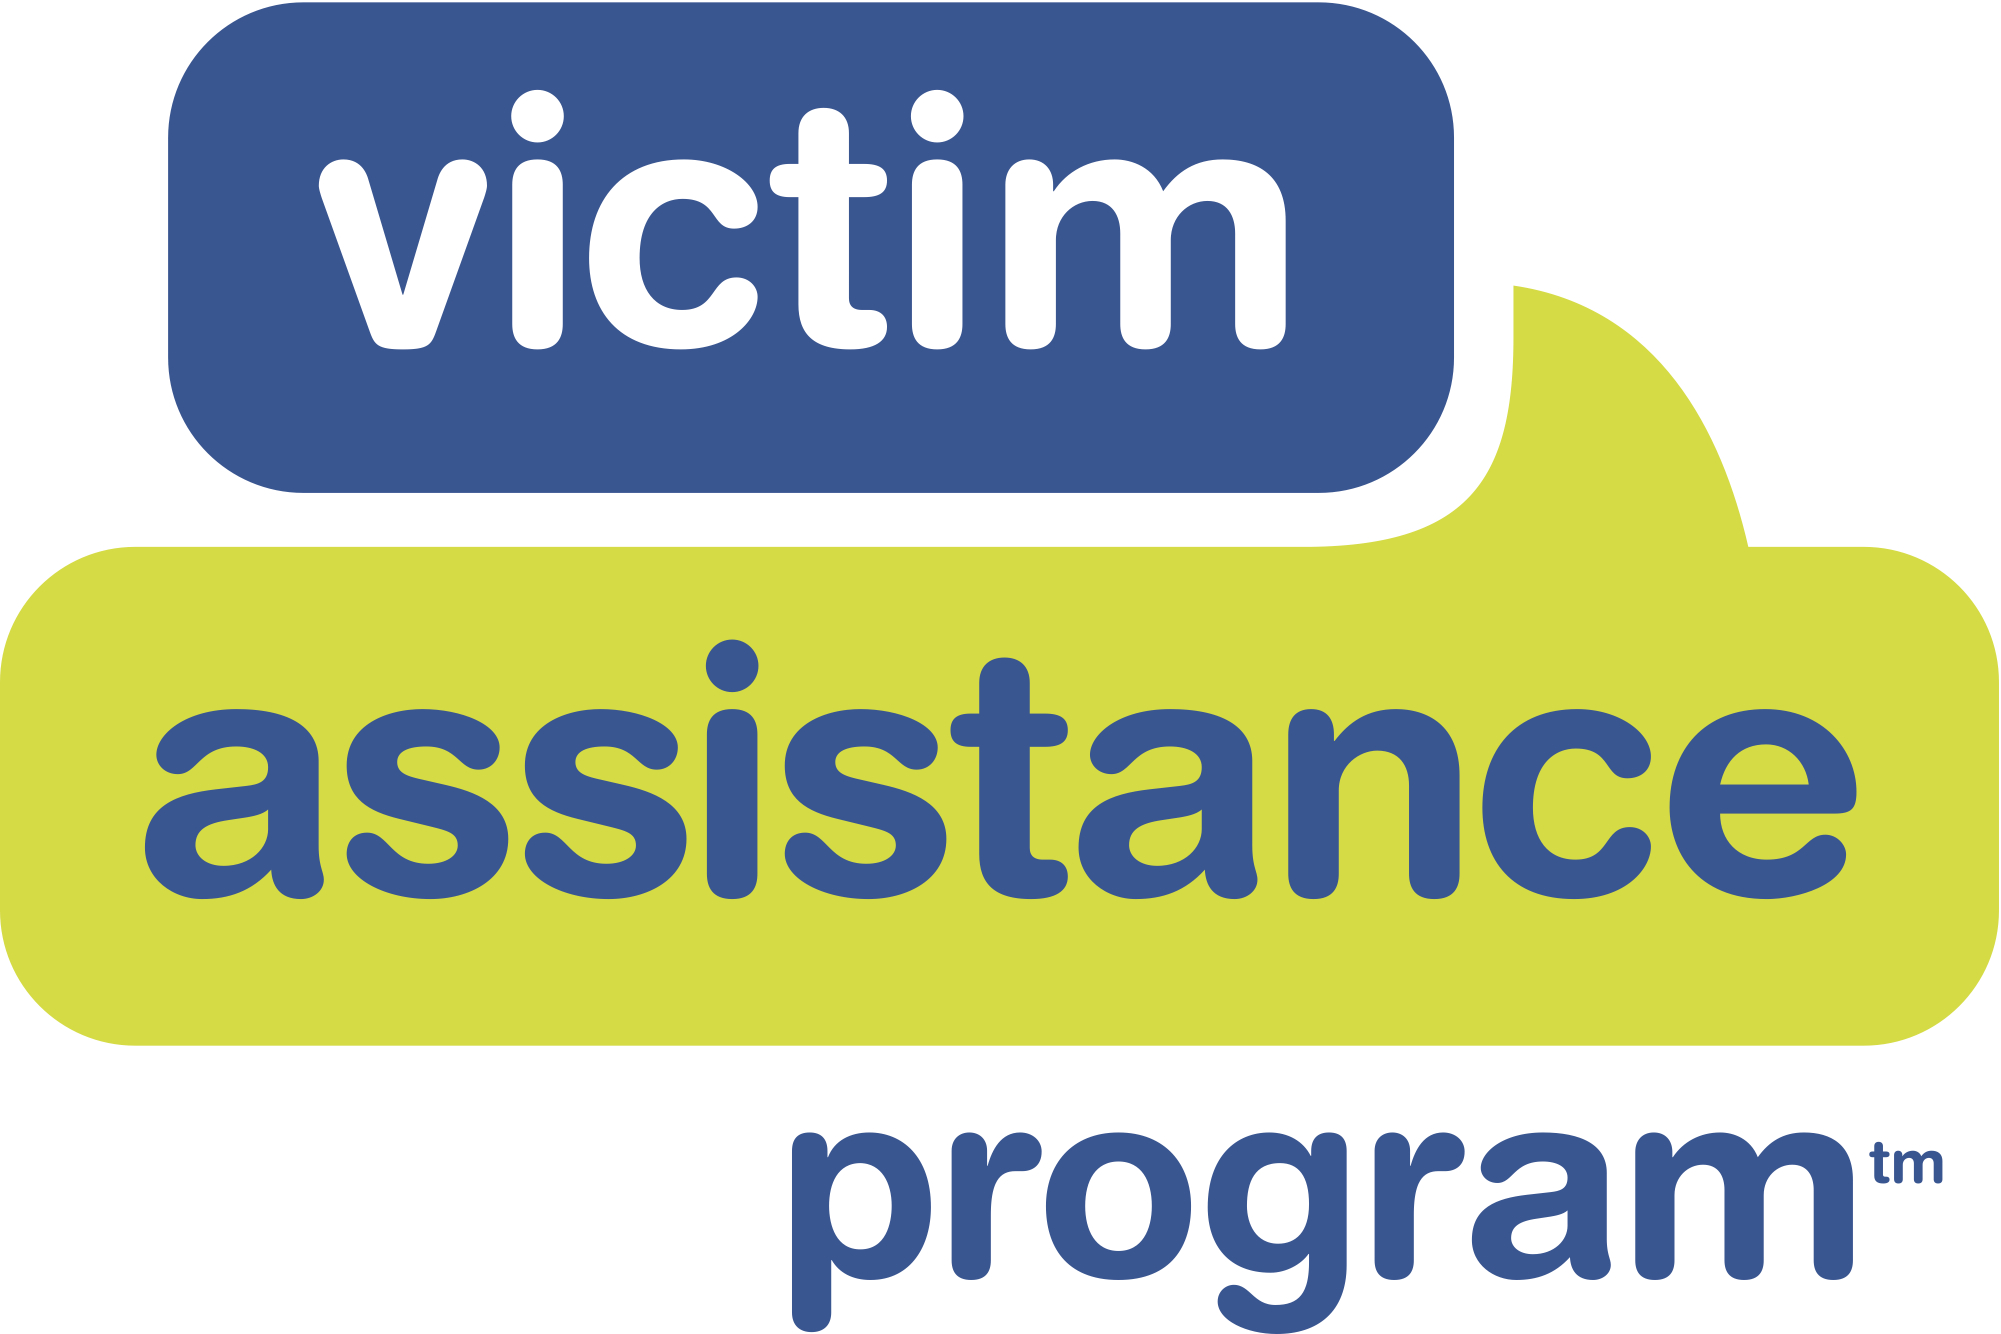 Victim Assistance Program logo